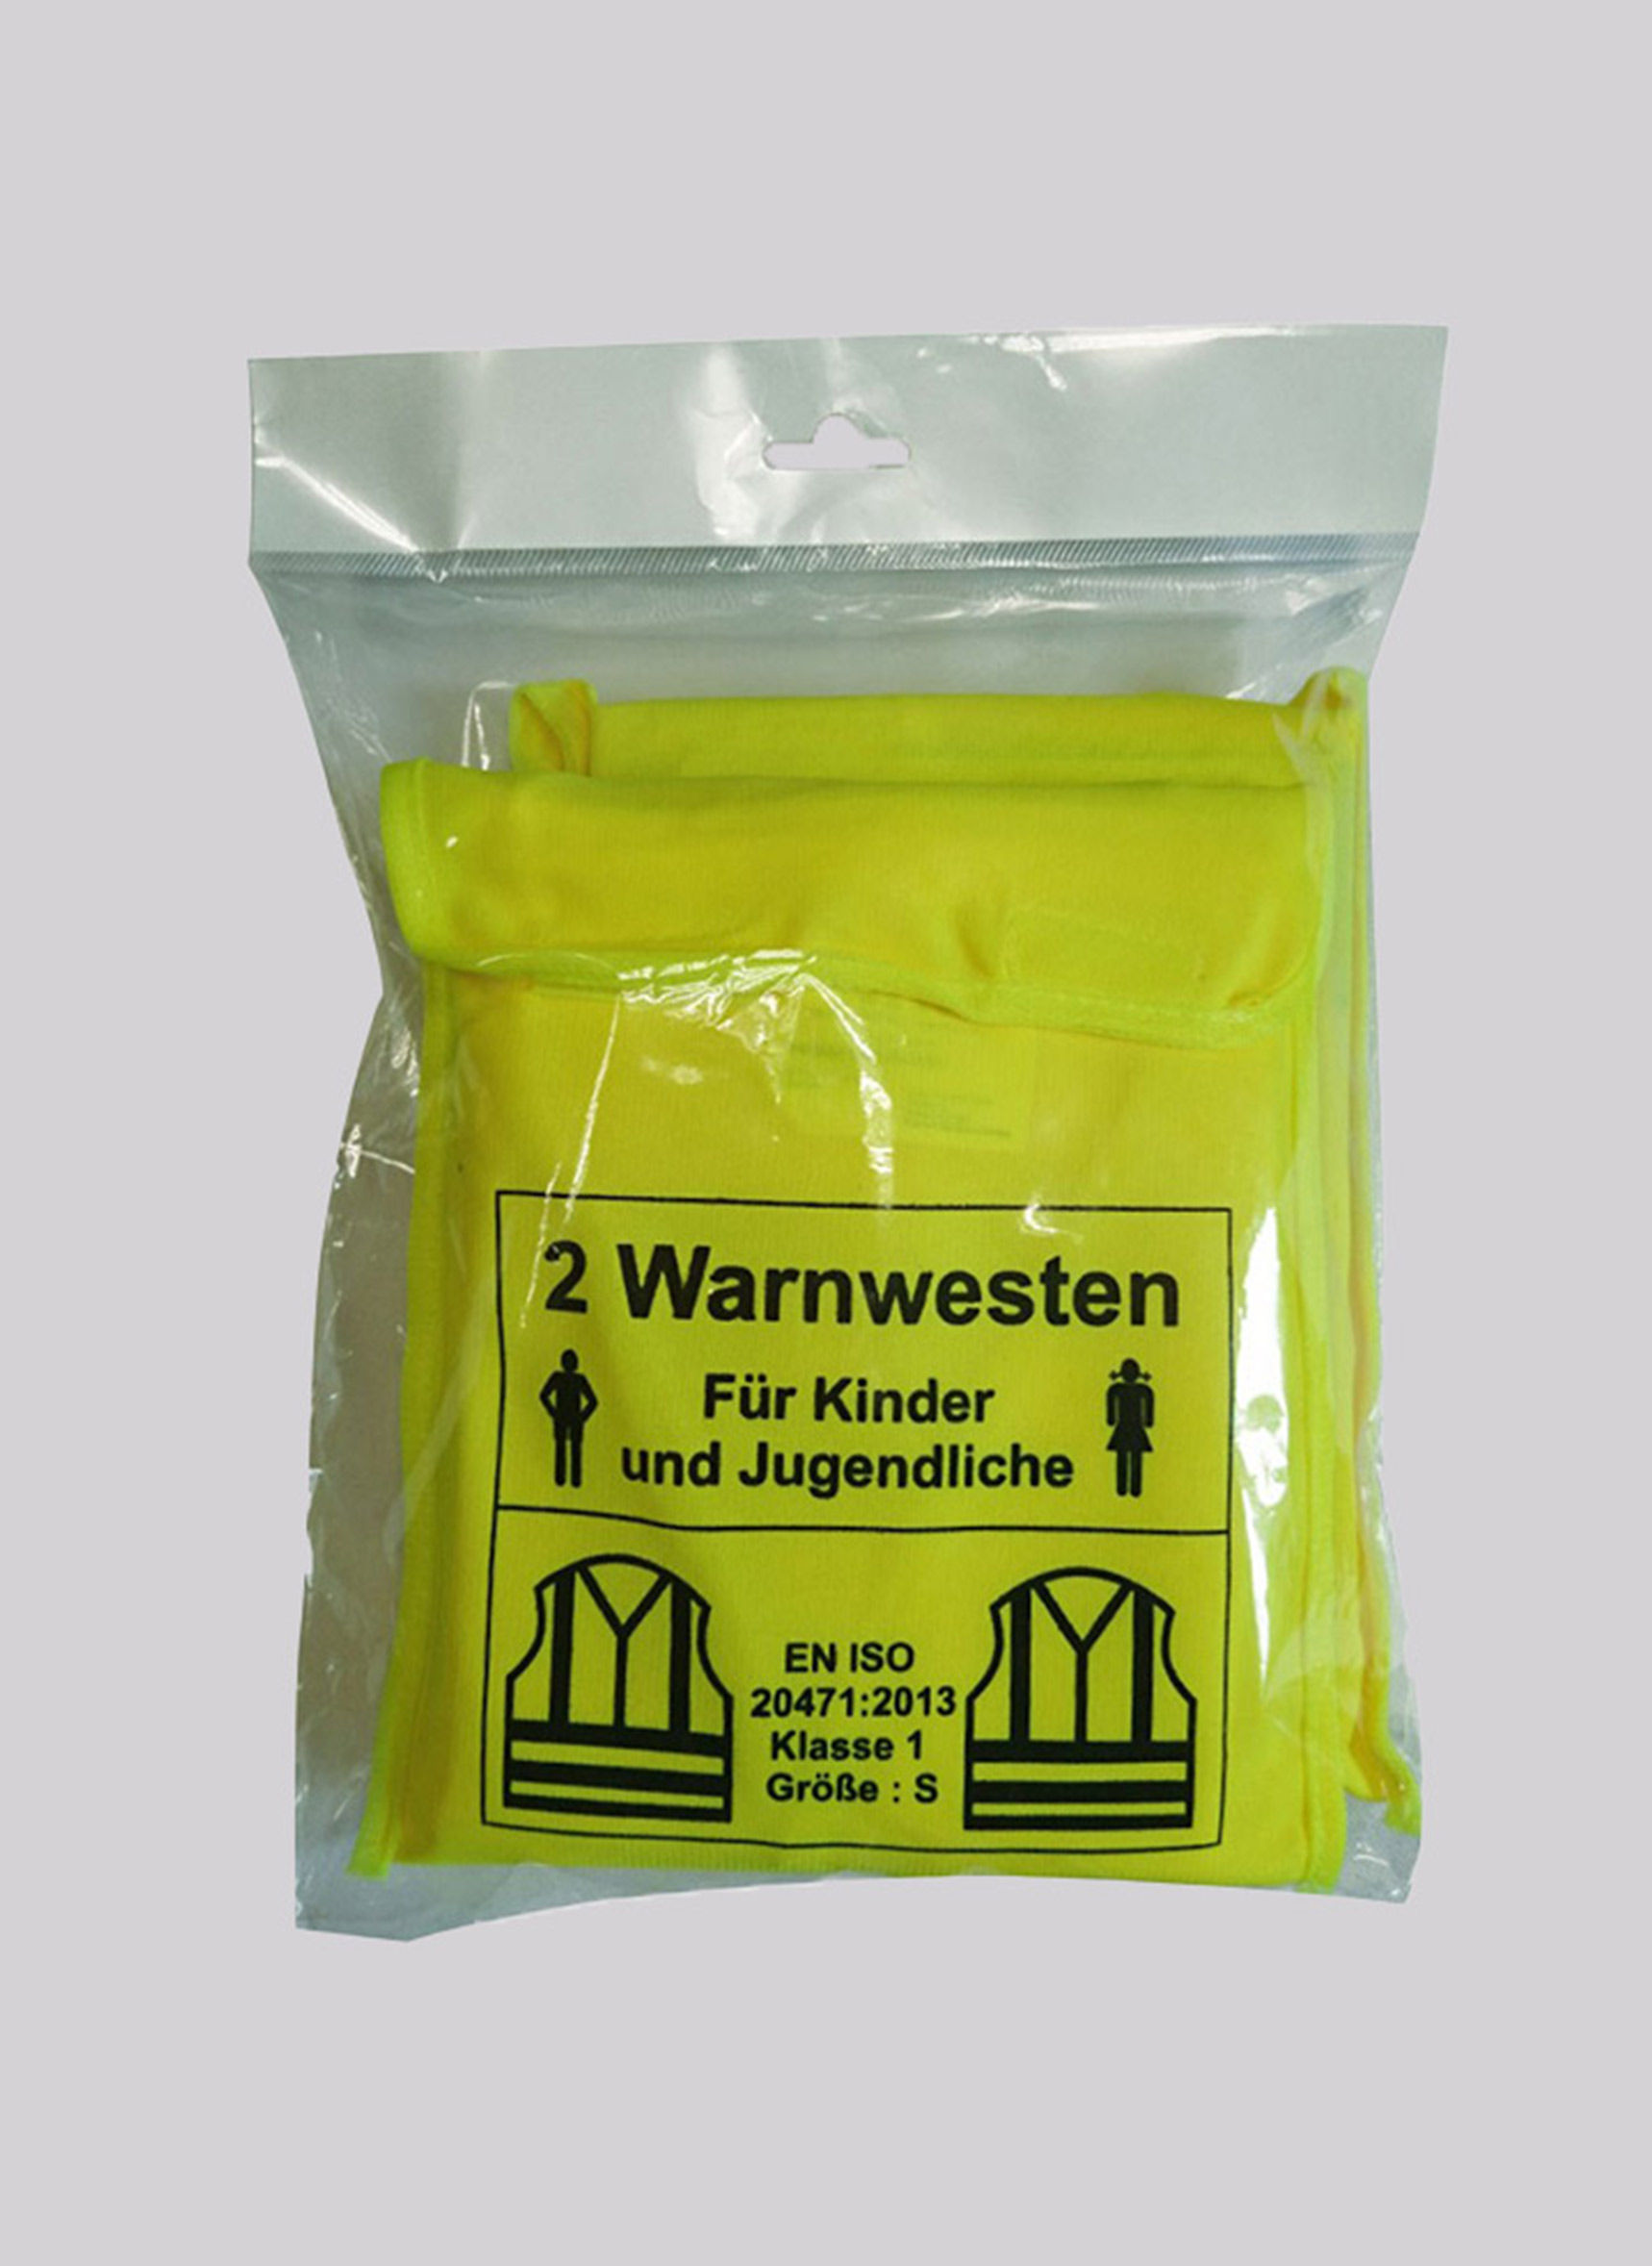 Standard Warnwesten-Family-Pack - in Gelb - ohne Werbeanbringung